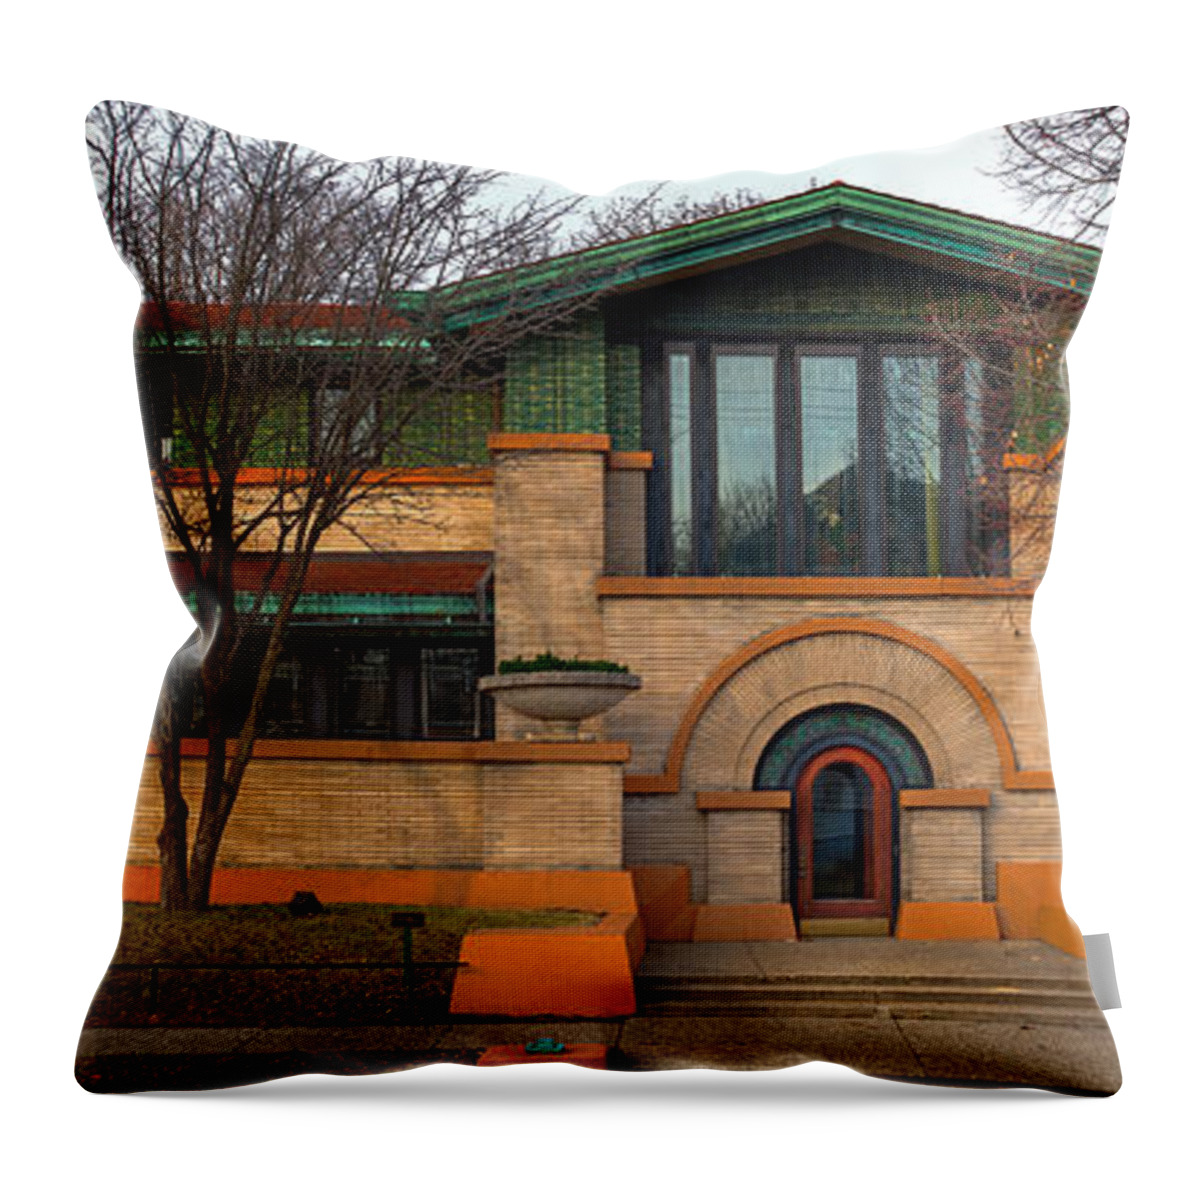 Frank Throw Pillow featuring the photograph Dana Thomas House Springfield I L by Steve Gadomski